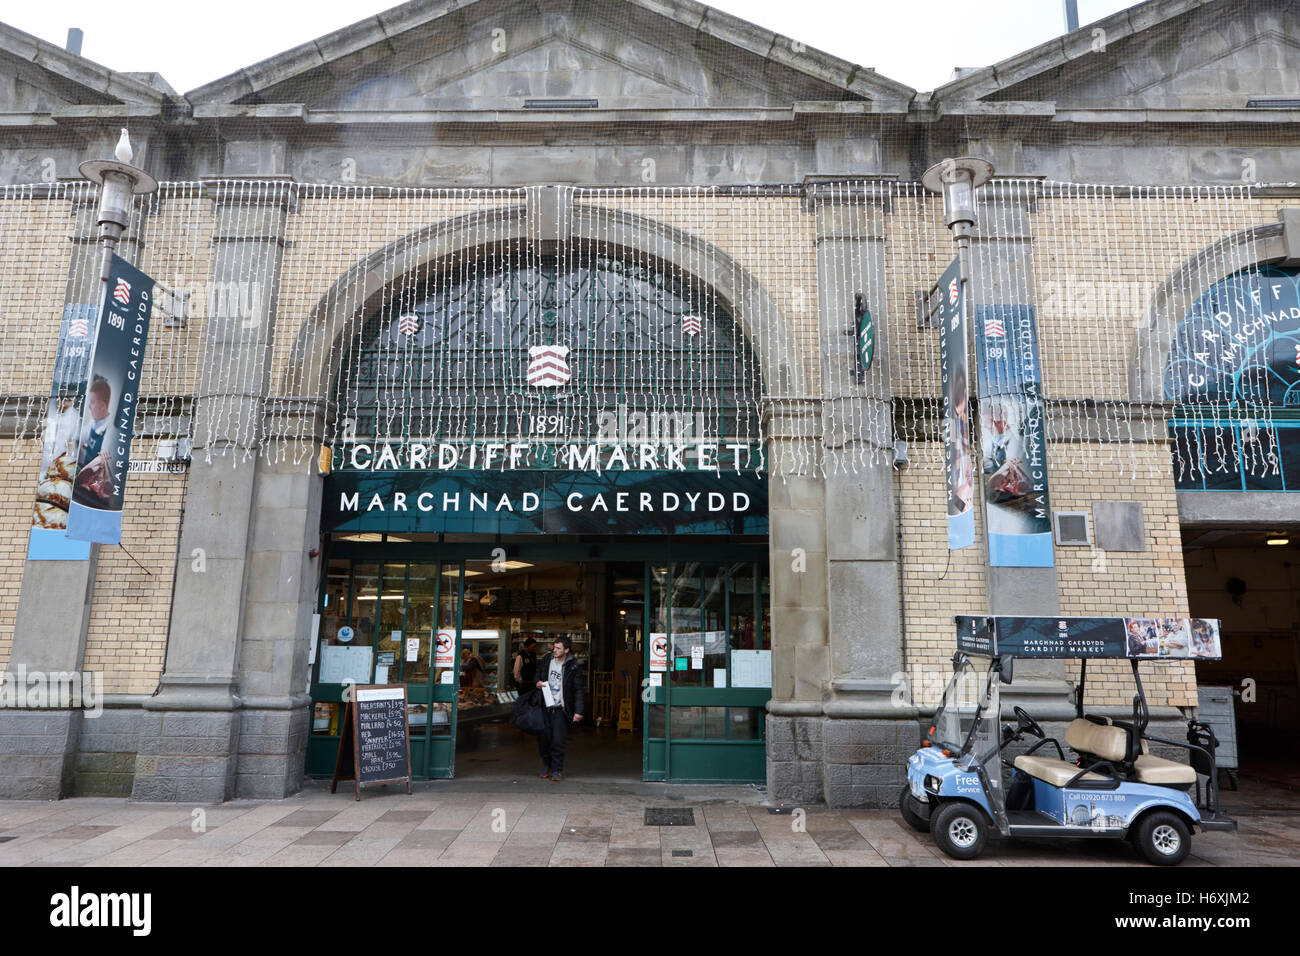 Cardiff central market Wales United Kingdom Stock Photo